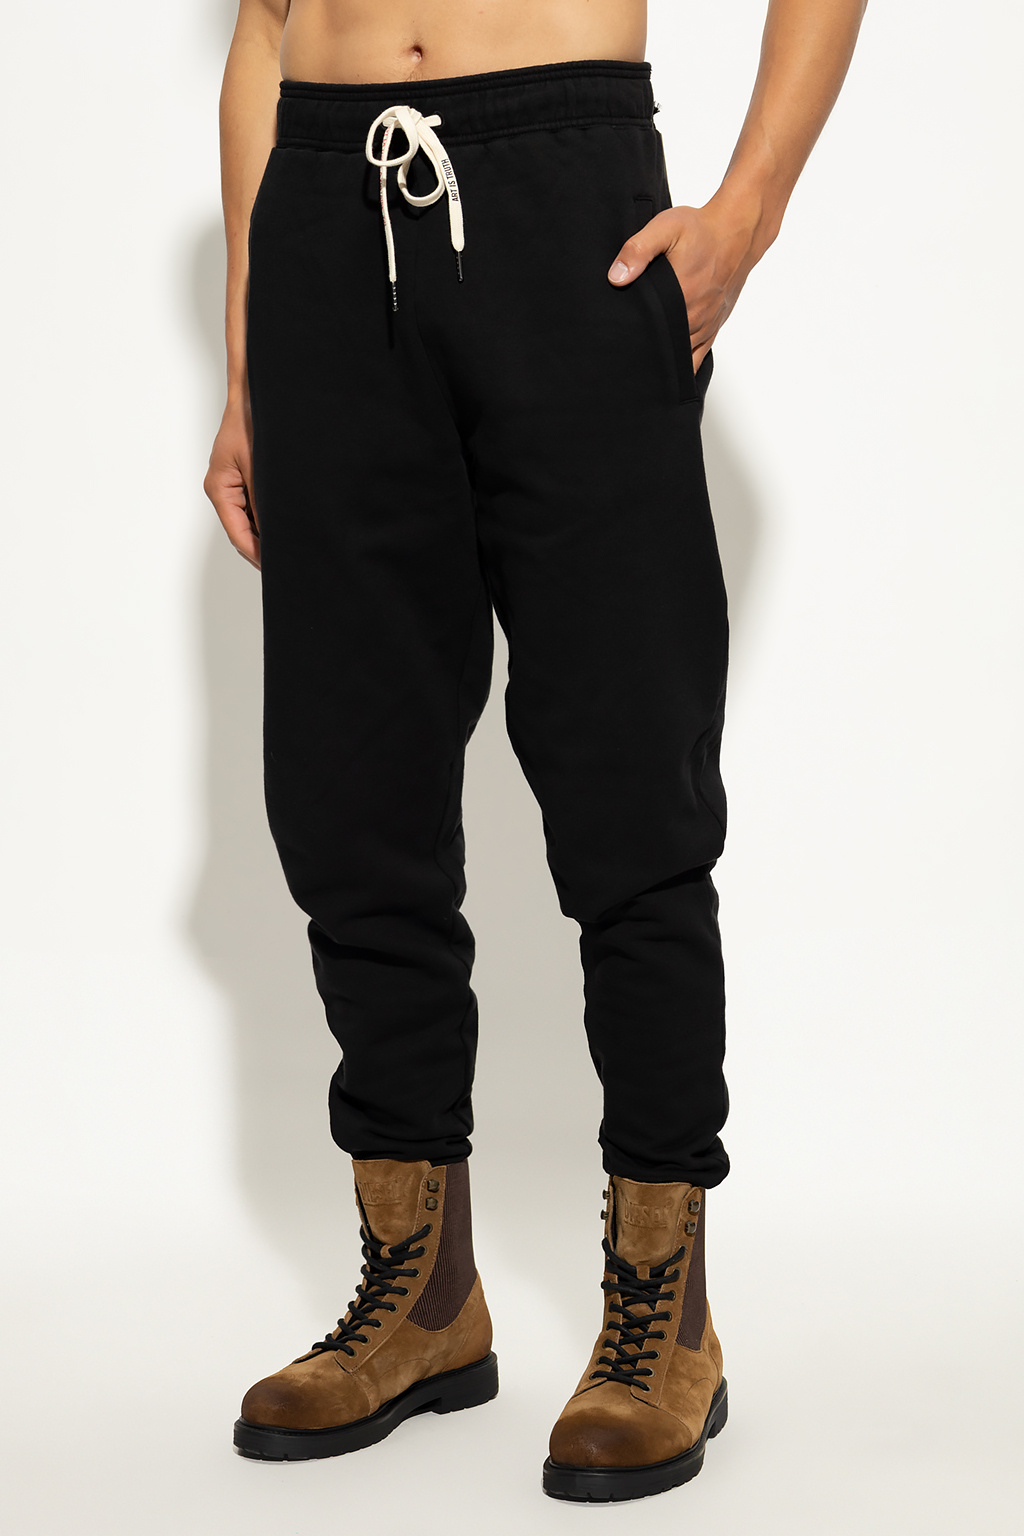 GenesinlifeShops Denmark - slim-fit tailored shorts Grey - Black 'Capri'  sweatpants Zadig & Voltaire